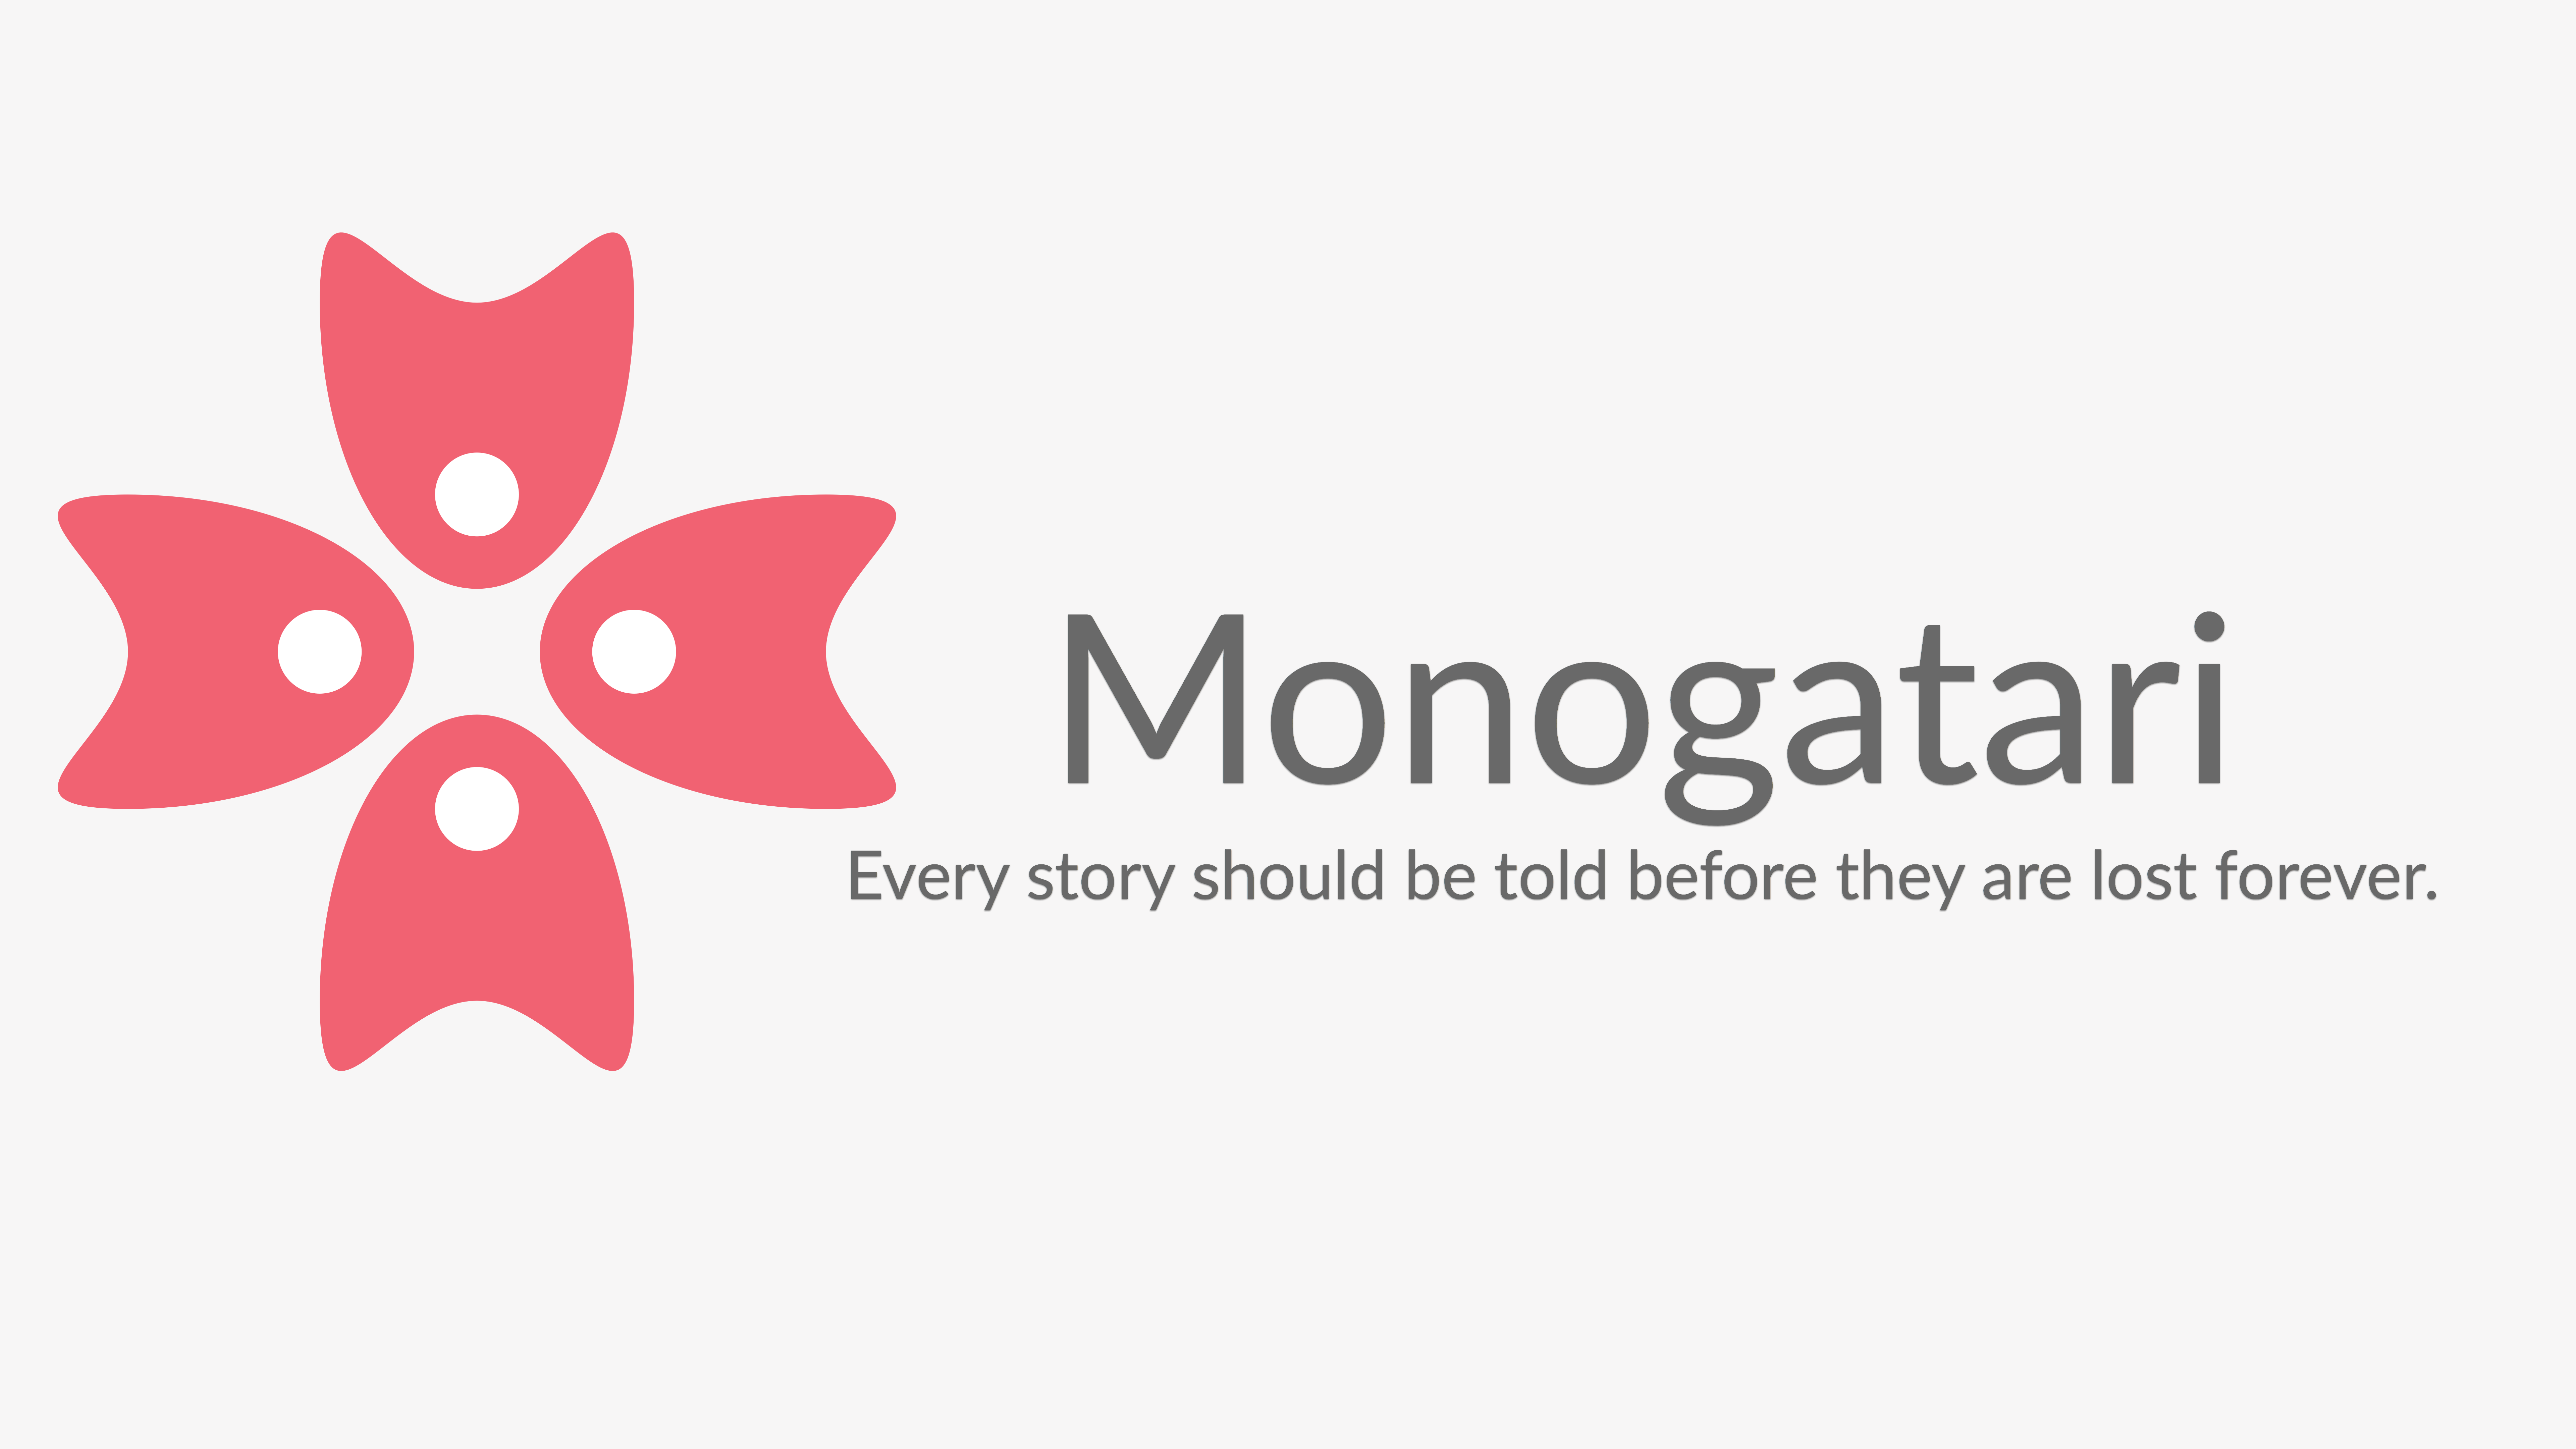 Monogatari: How to Modify Splash Screen